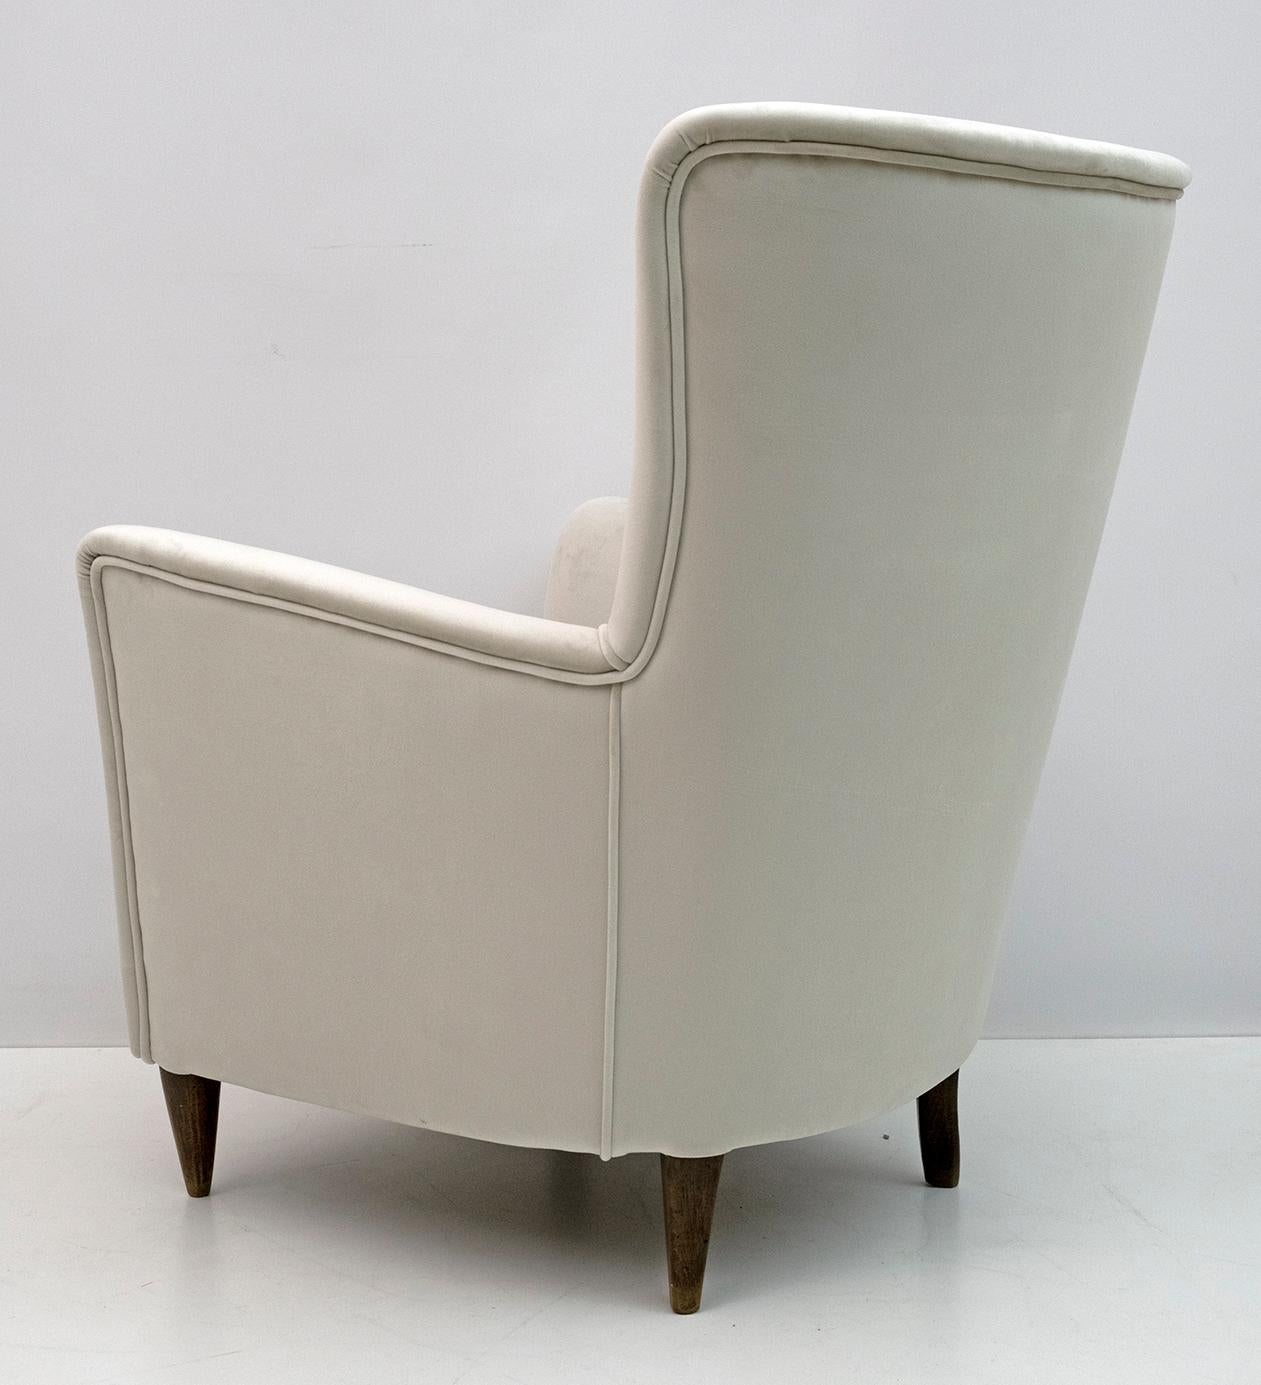 Pair of Gio Ponti Style Mid-Century Modern Italian Velvet Armchairs for Isa, 50s For Sale 6